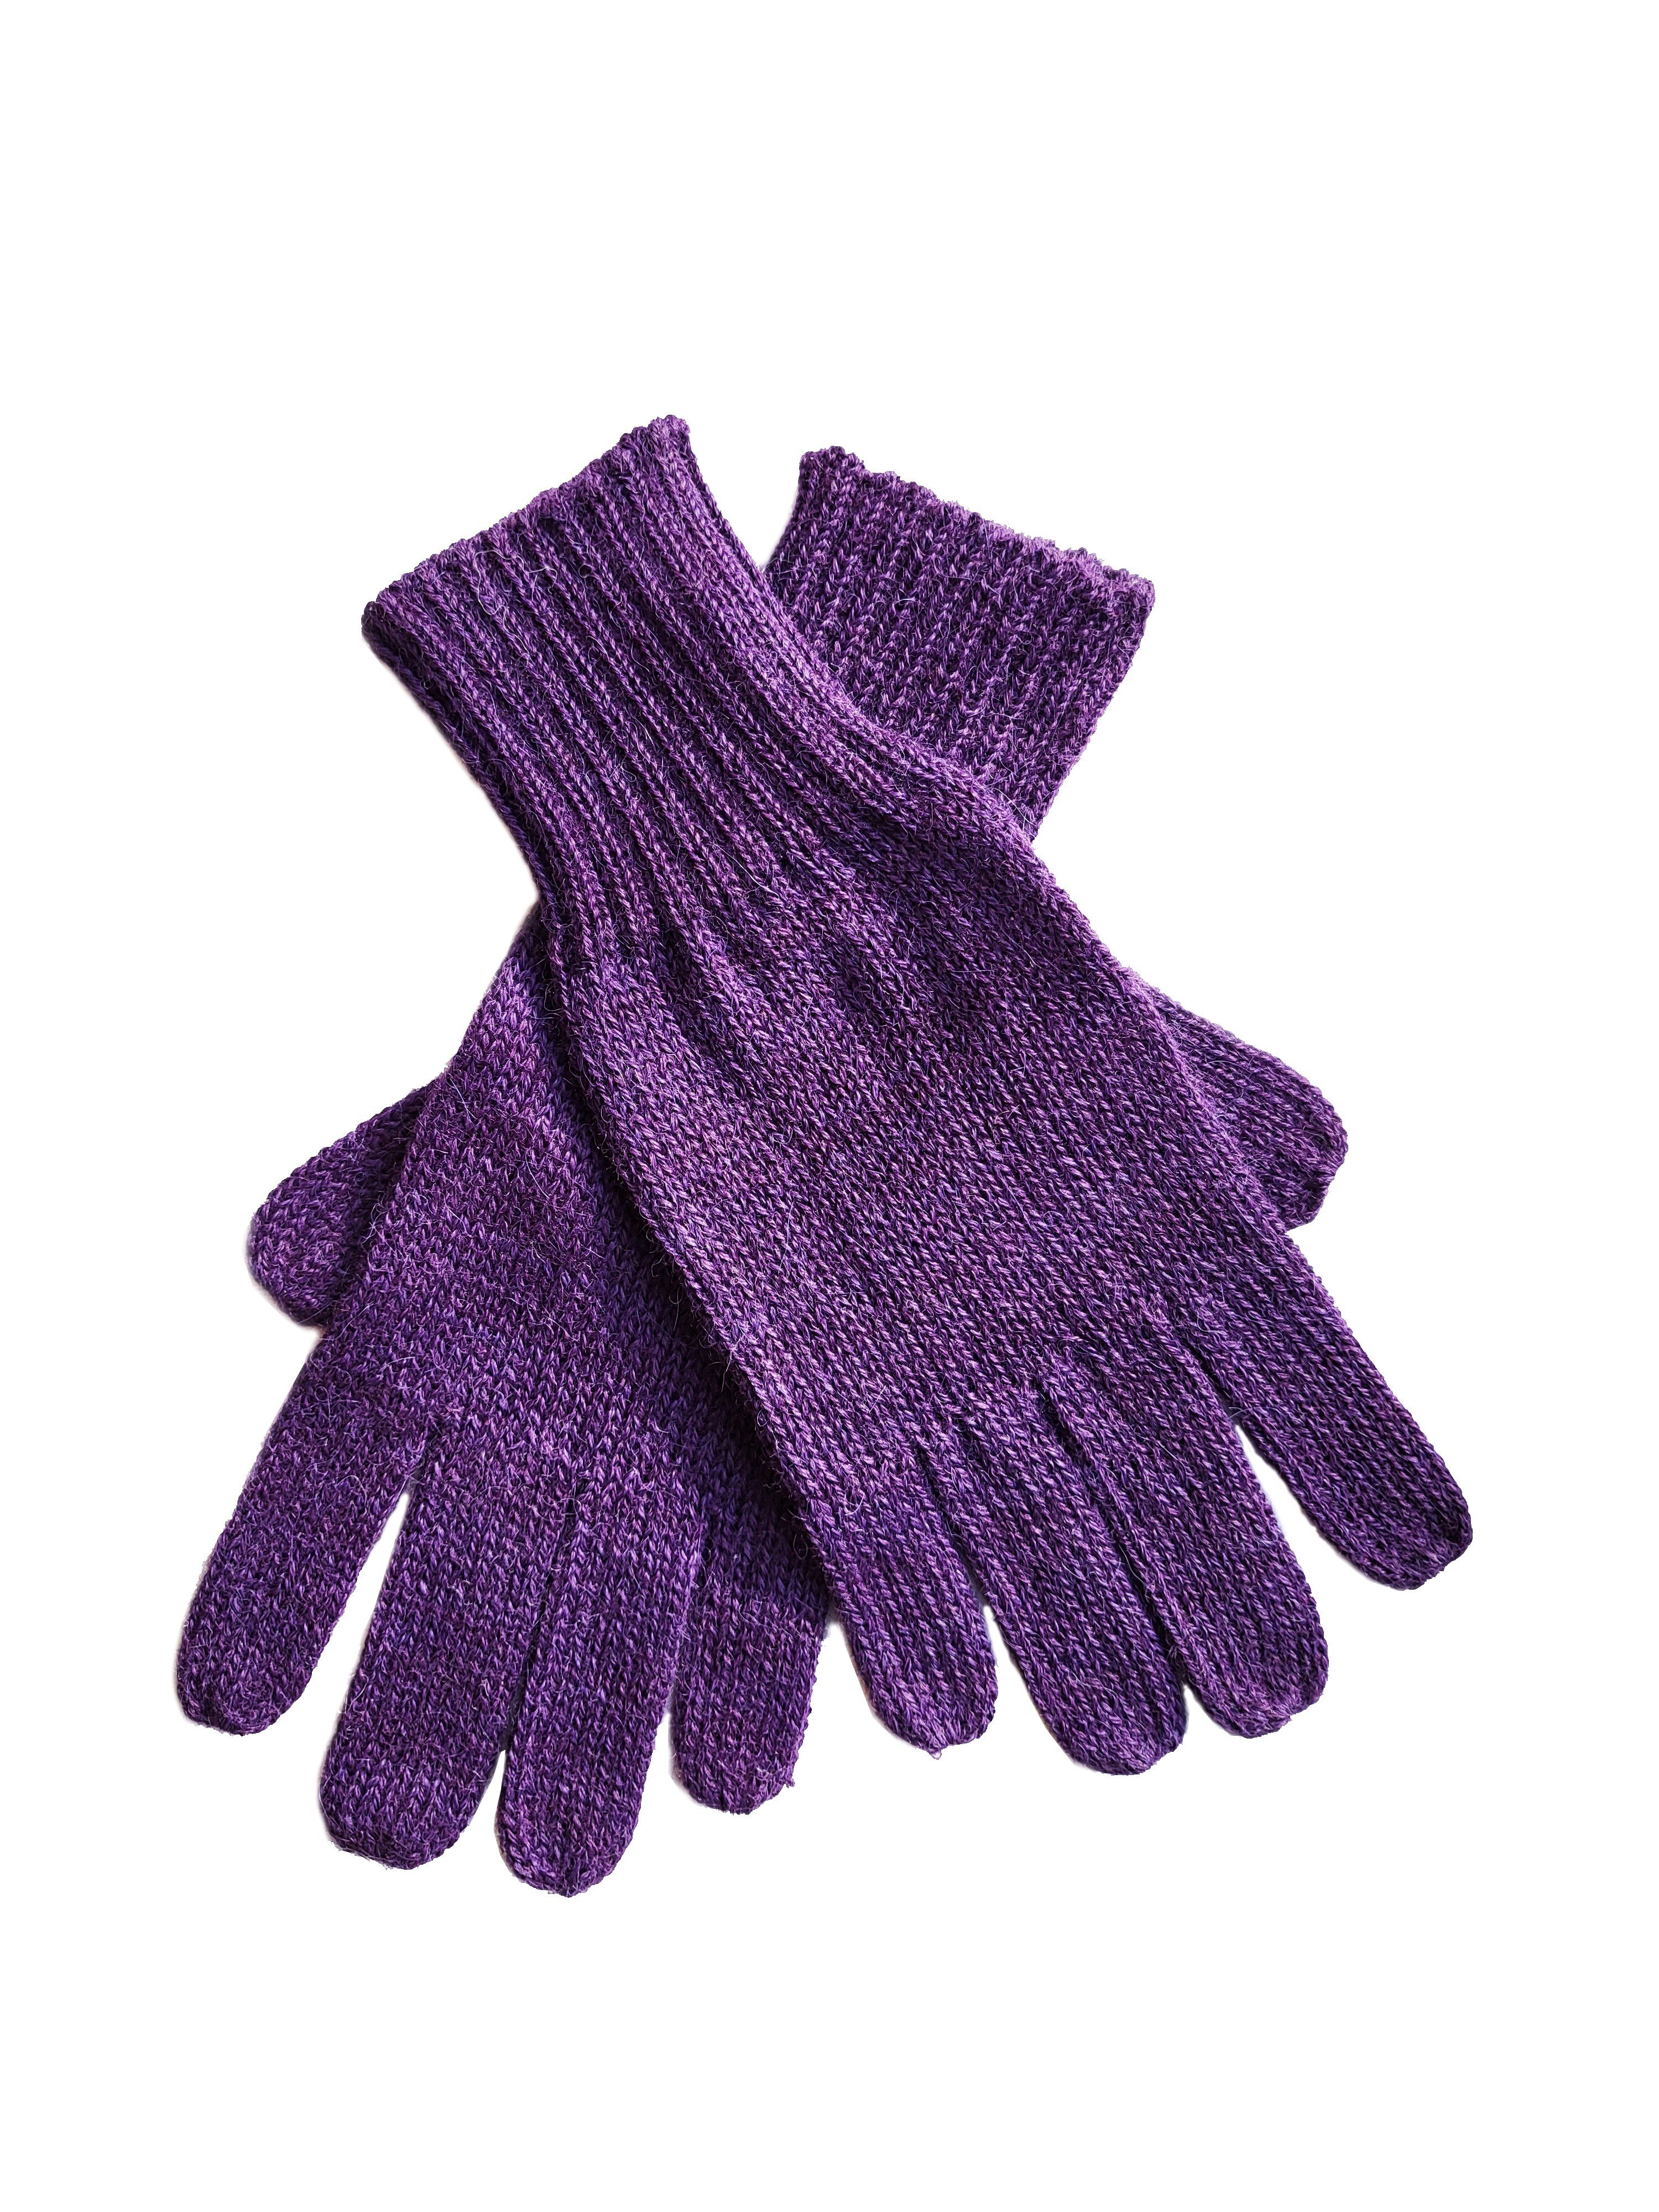 Posh Gear Strickhandschuhe Guantino Alpaka Fingerhandschuhe aus 100% Alpakawolle lila